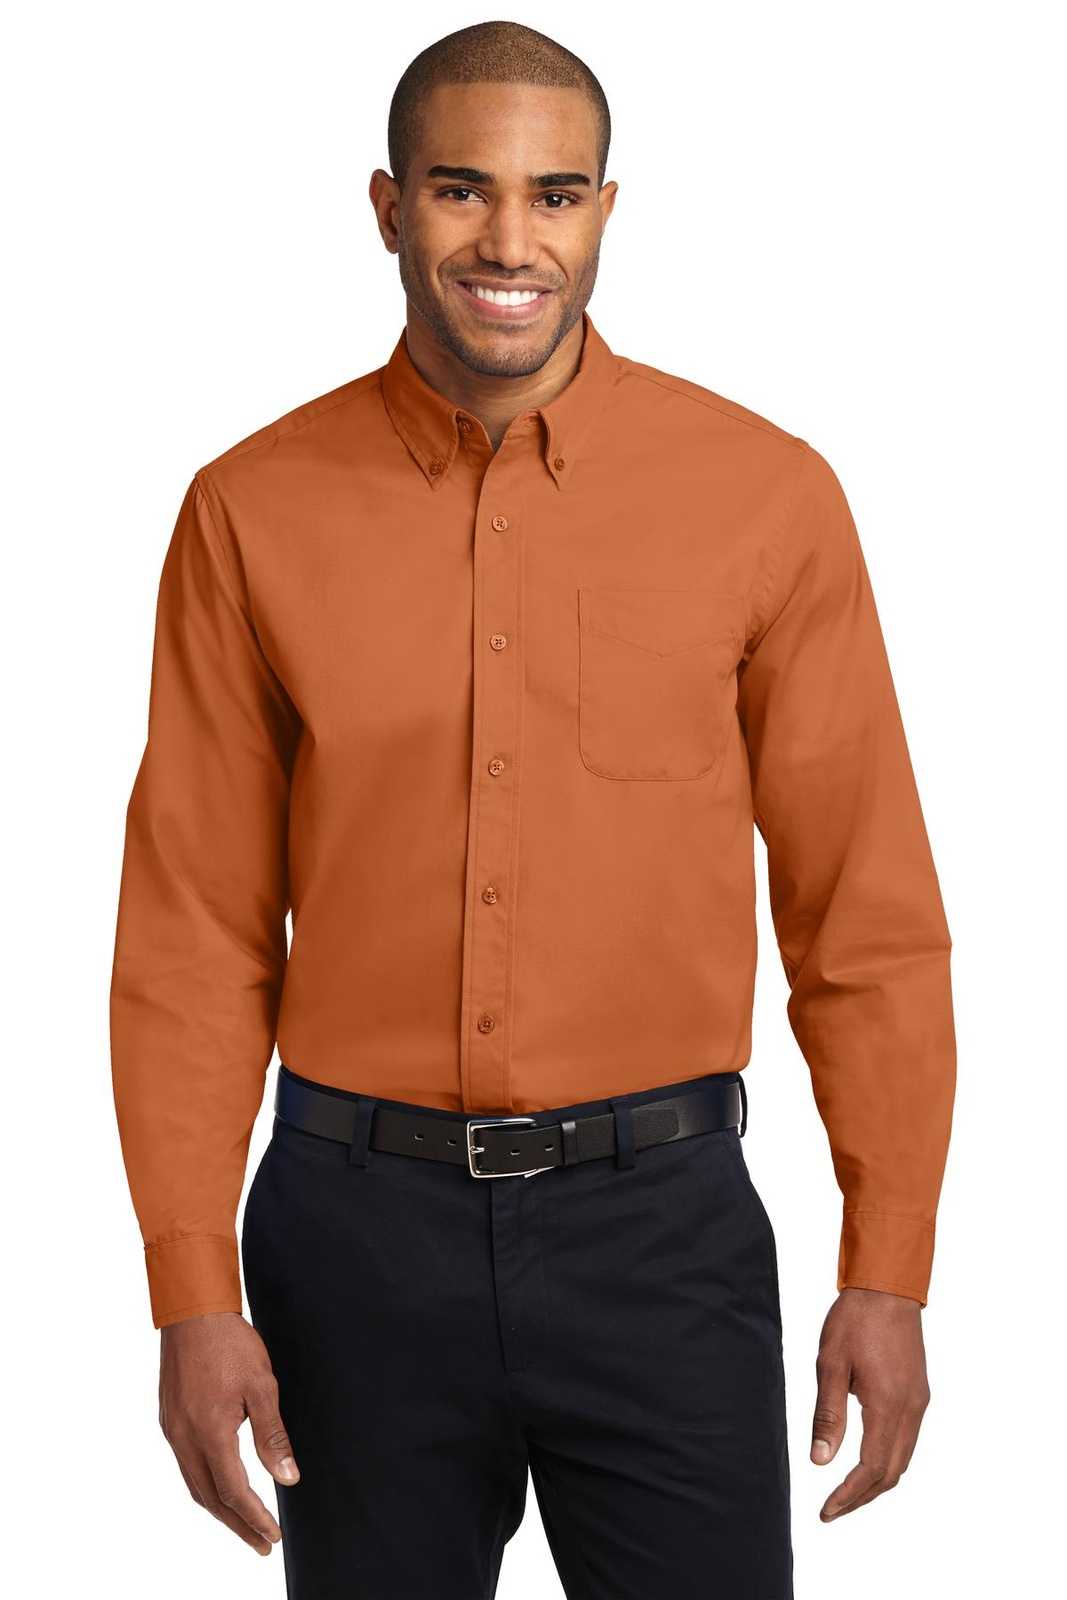 Port Authority S608 Long Sleeve Easy Care Shirt - Texas Orange Light Stone - HIT a Double - 1